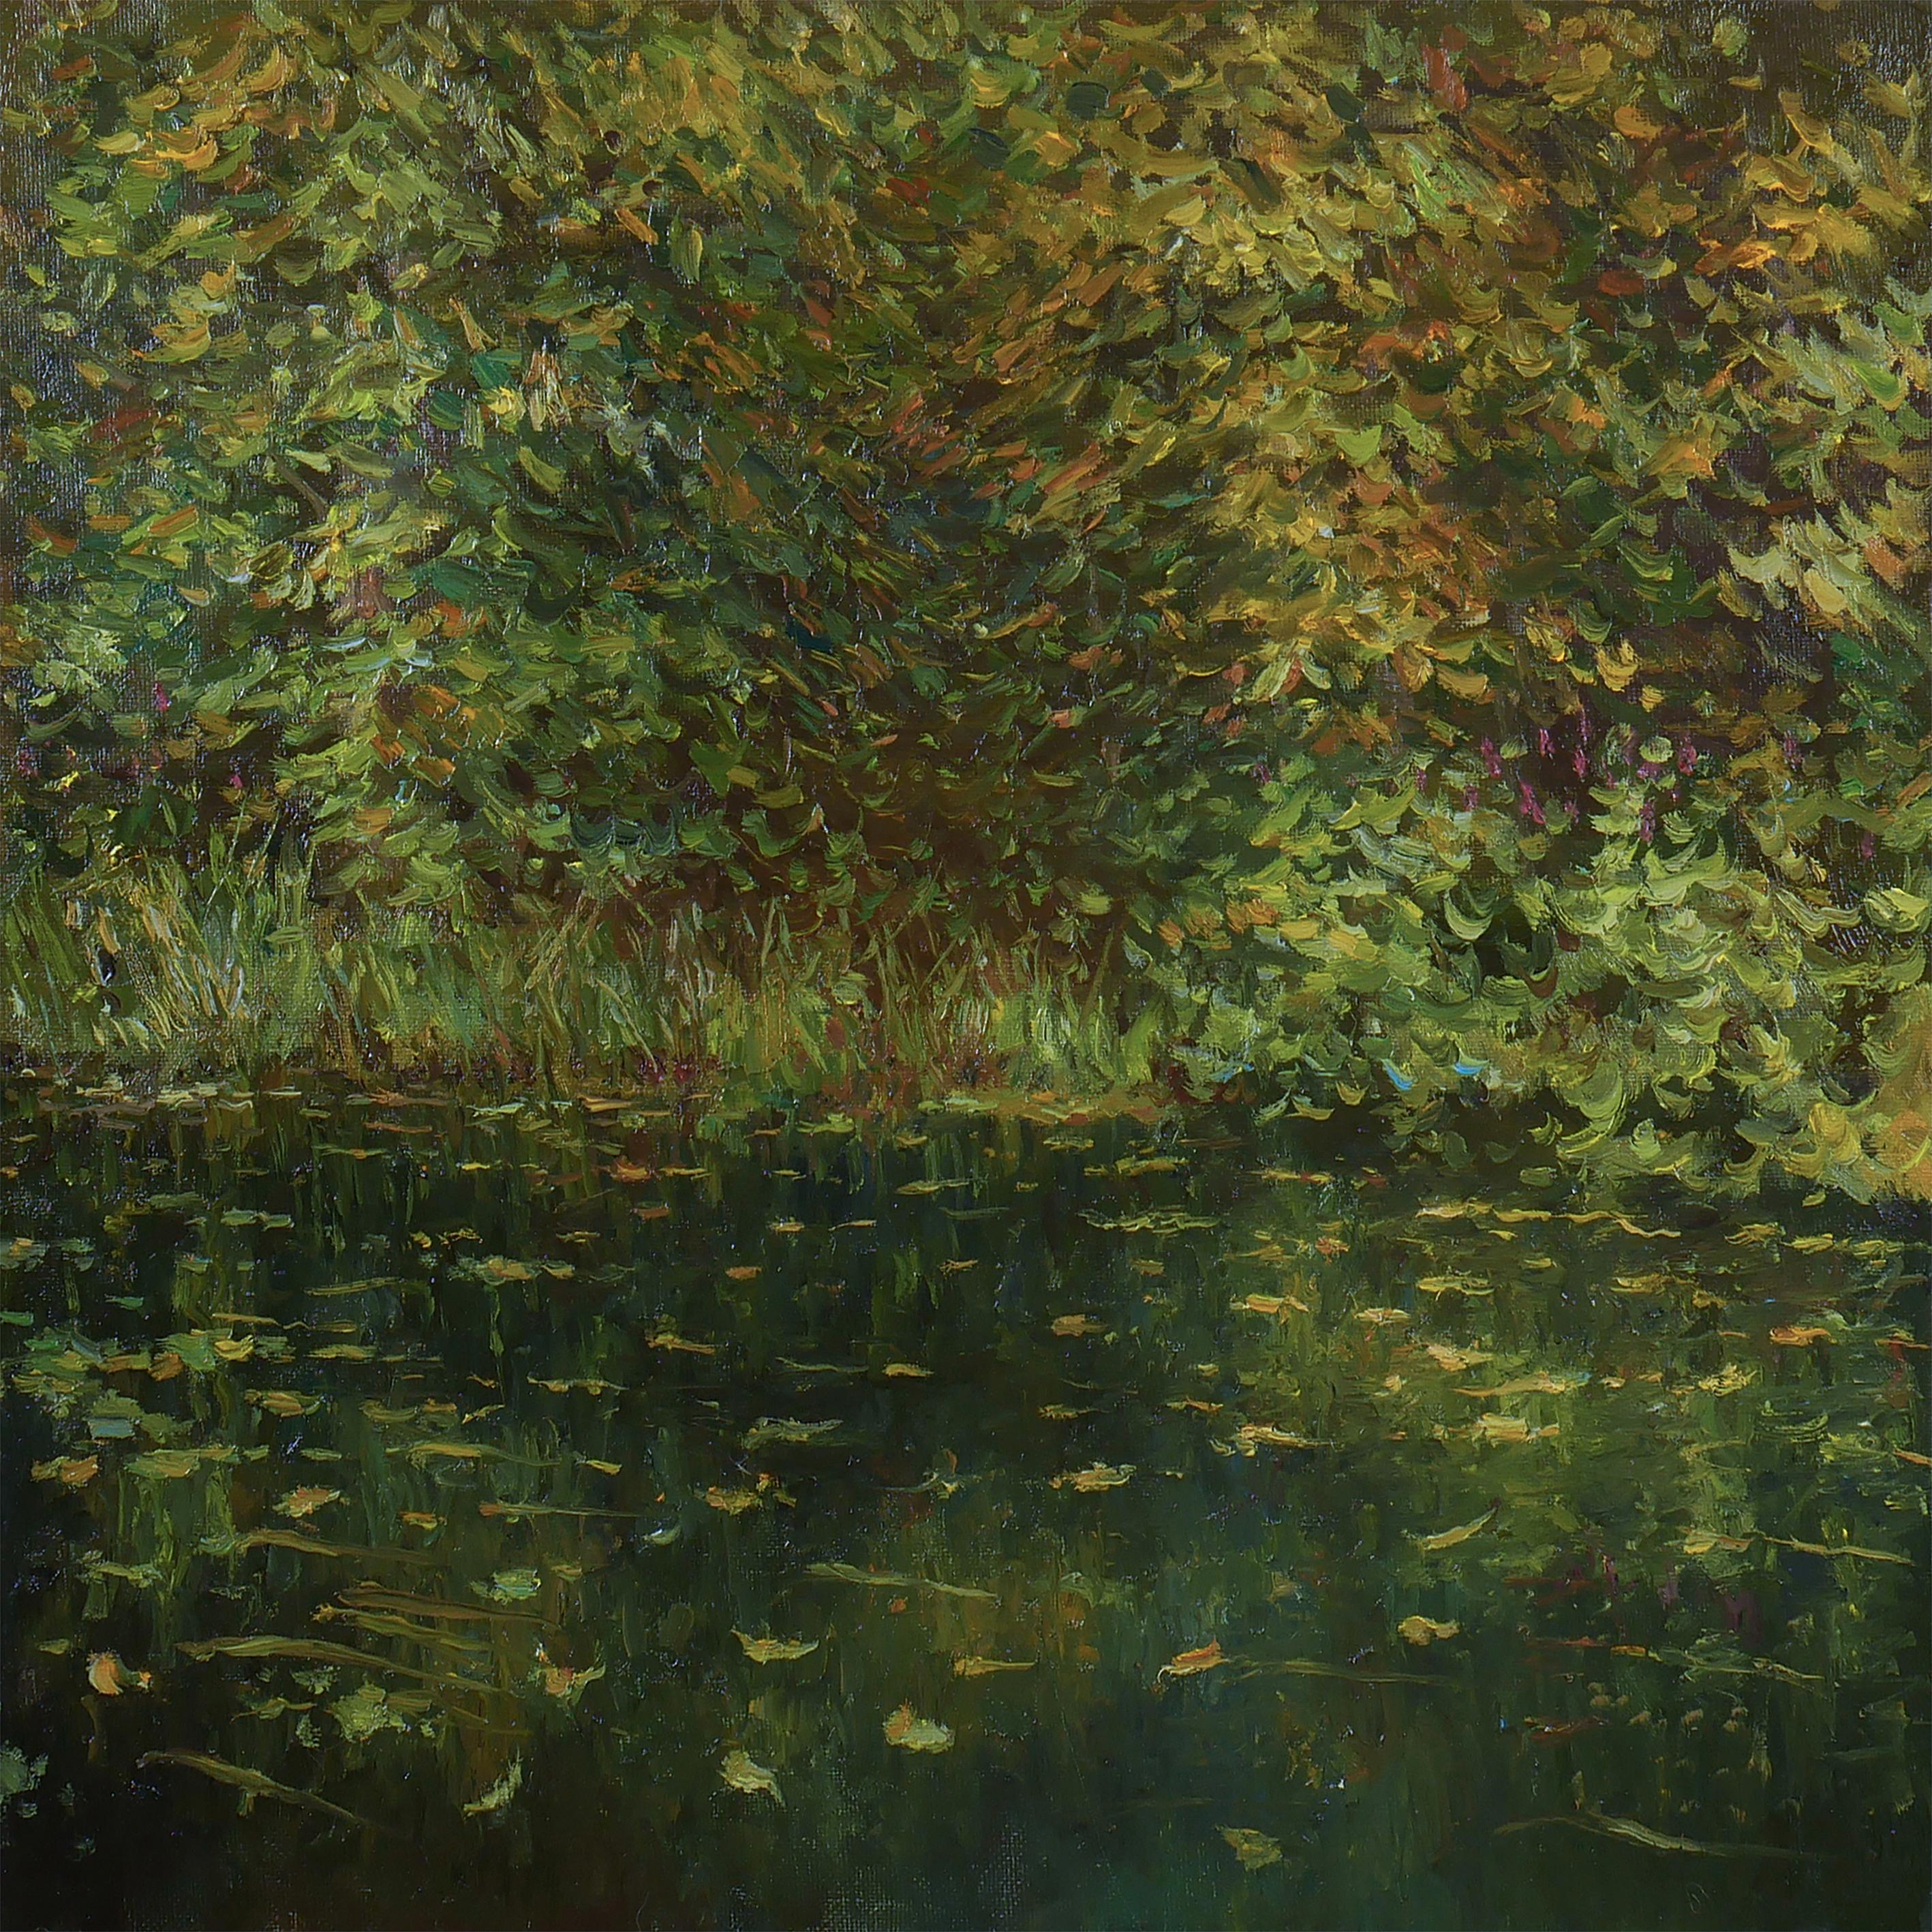 Nikolay Dmitriev Landscape Painting - The Autumn Backwater - sunny river landscape painting